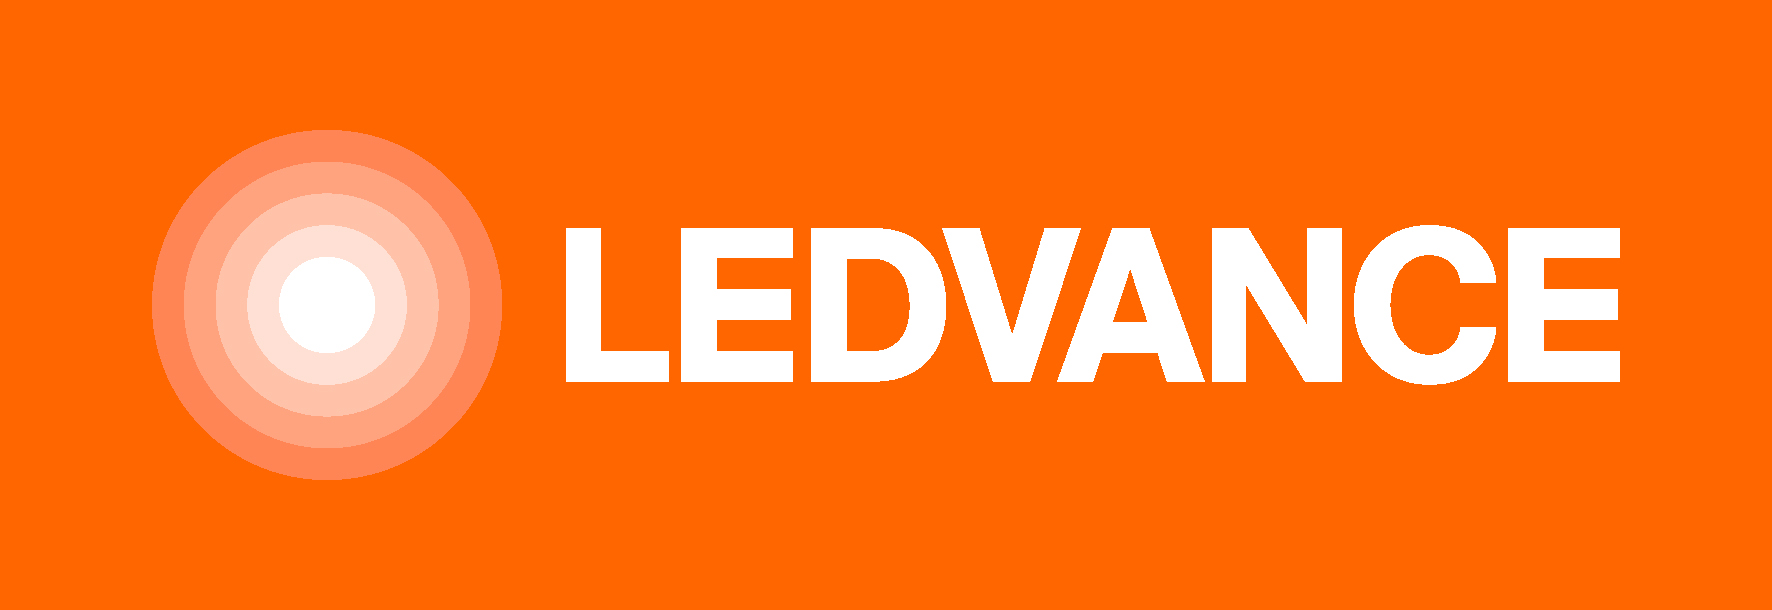 LEDVANCE Logo RGB